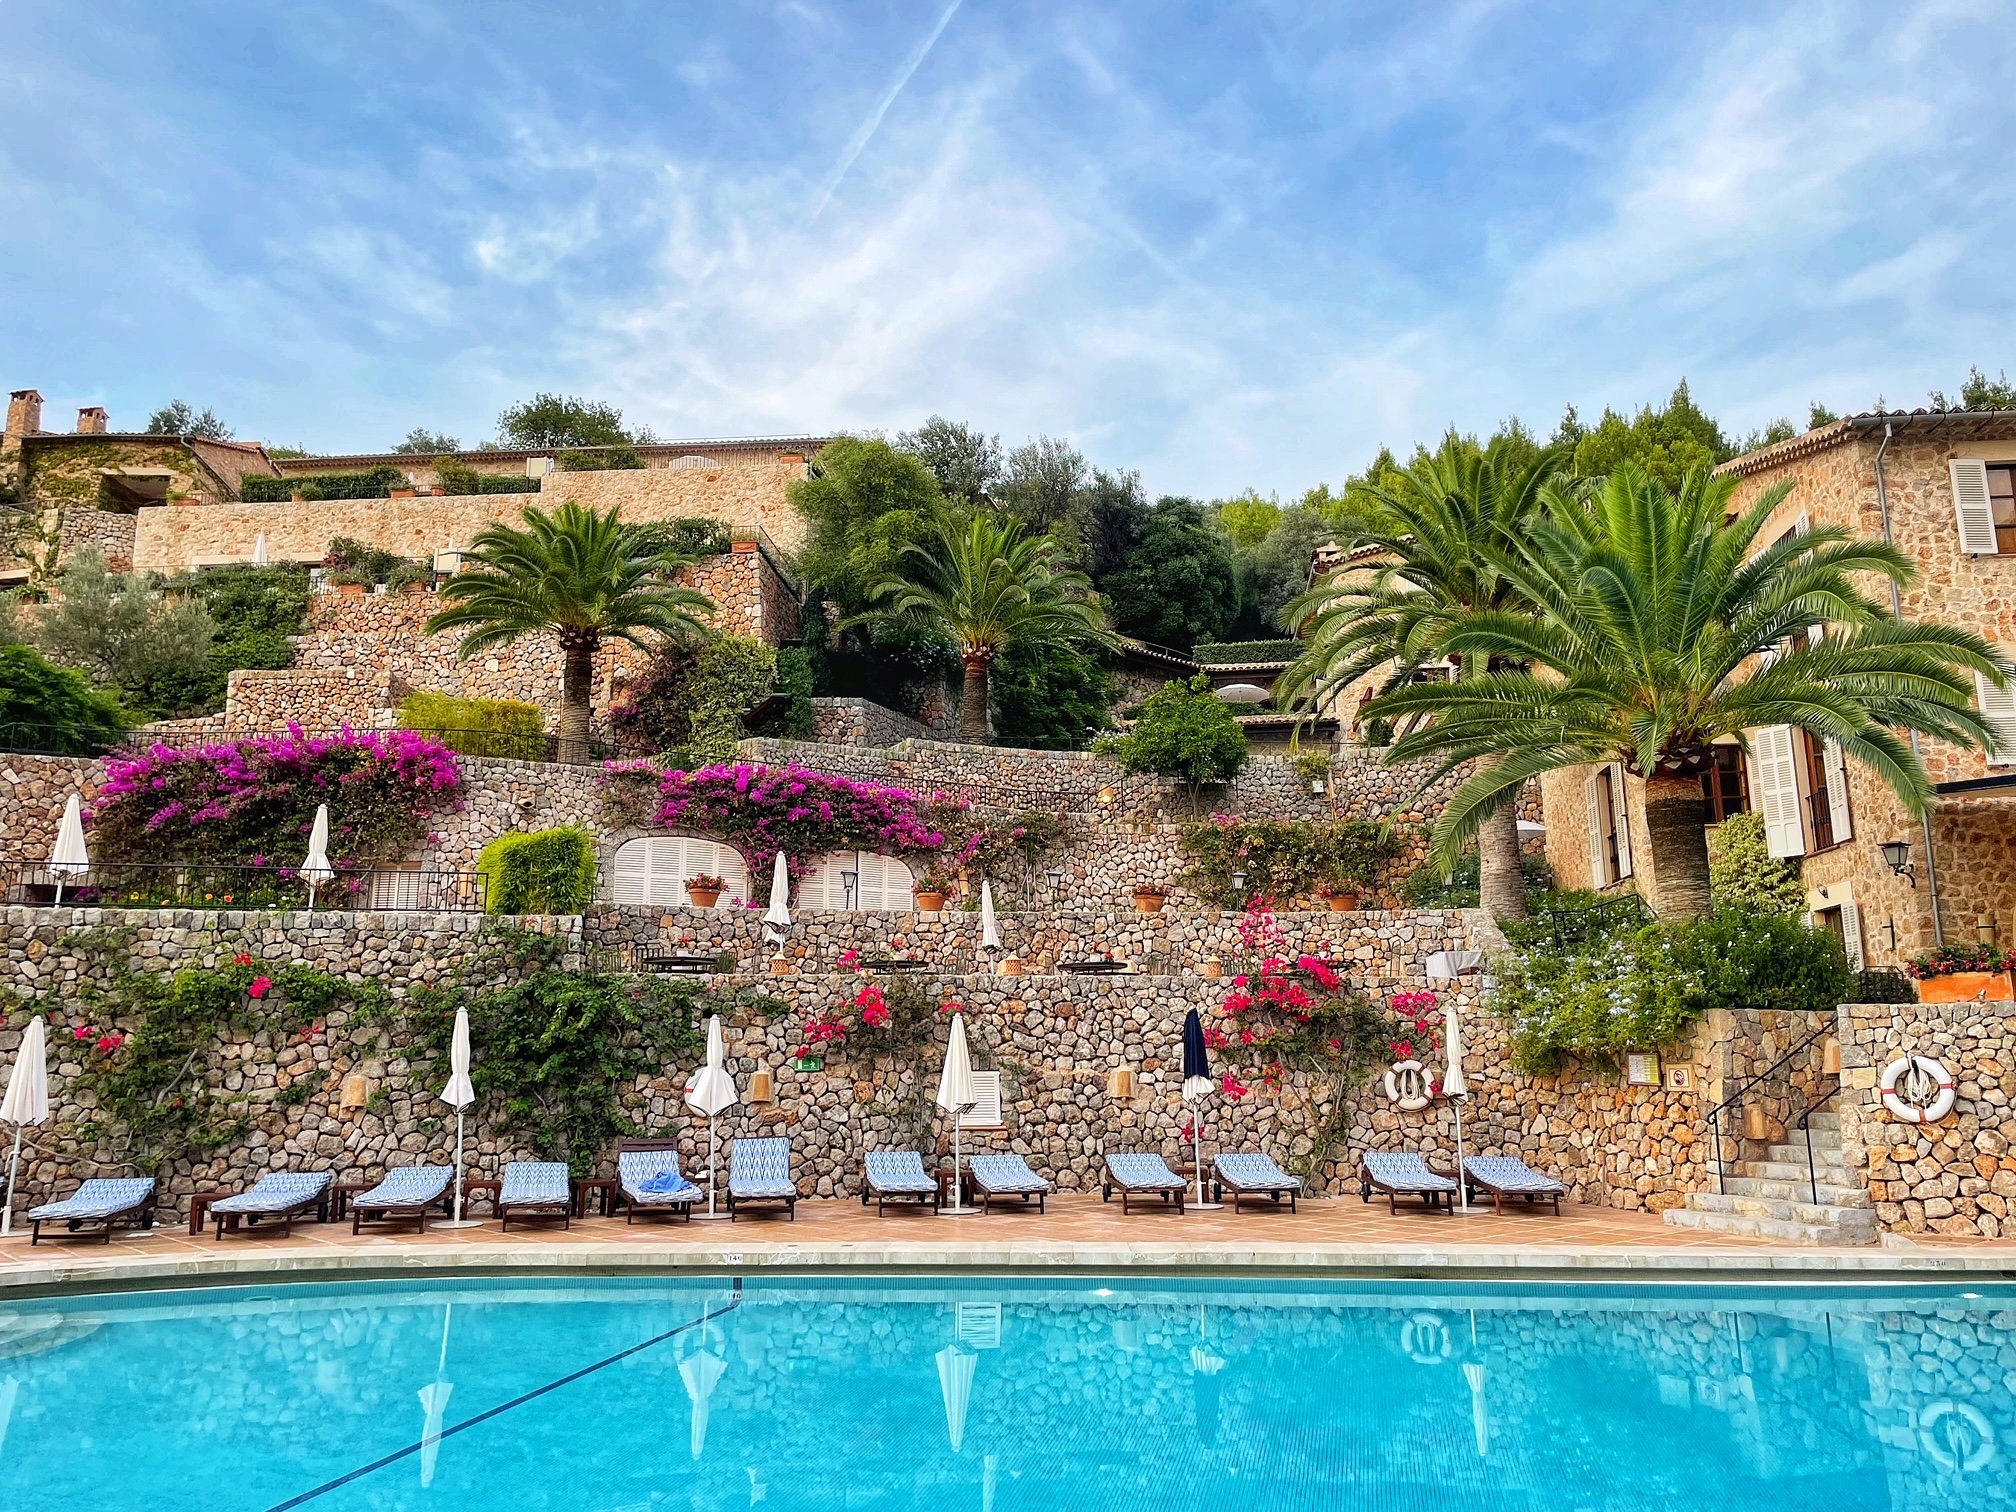 La Residencia, A Belmond Hotel, Mallorca, Balearic Islands